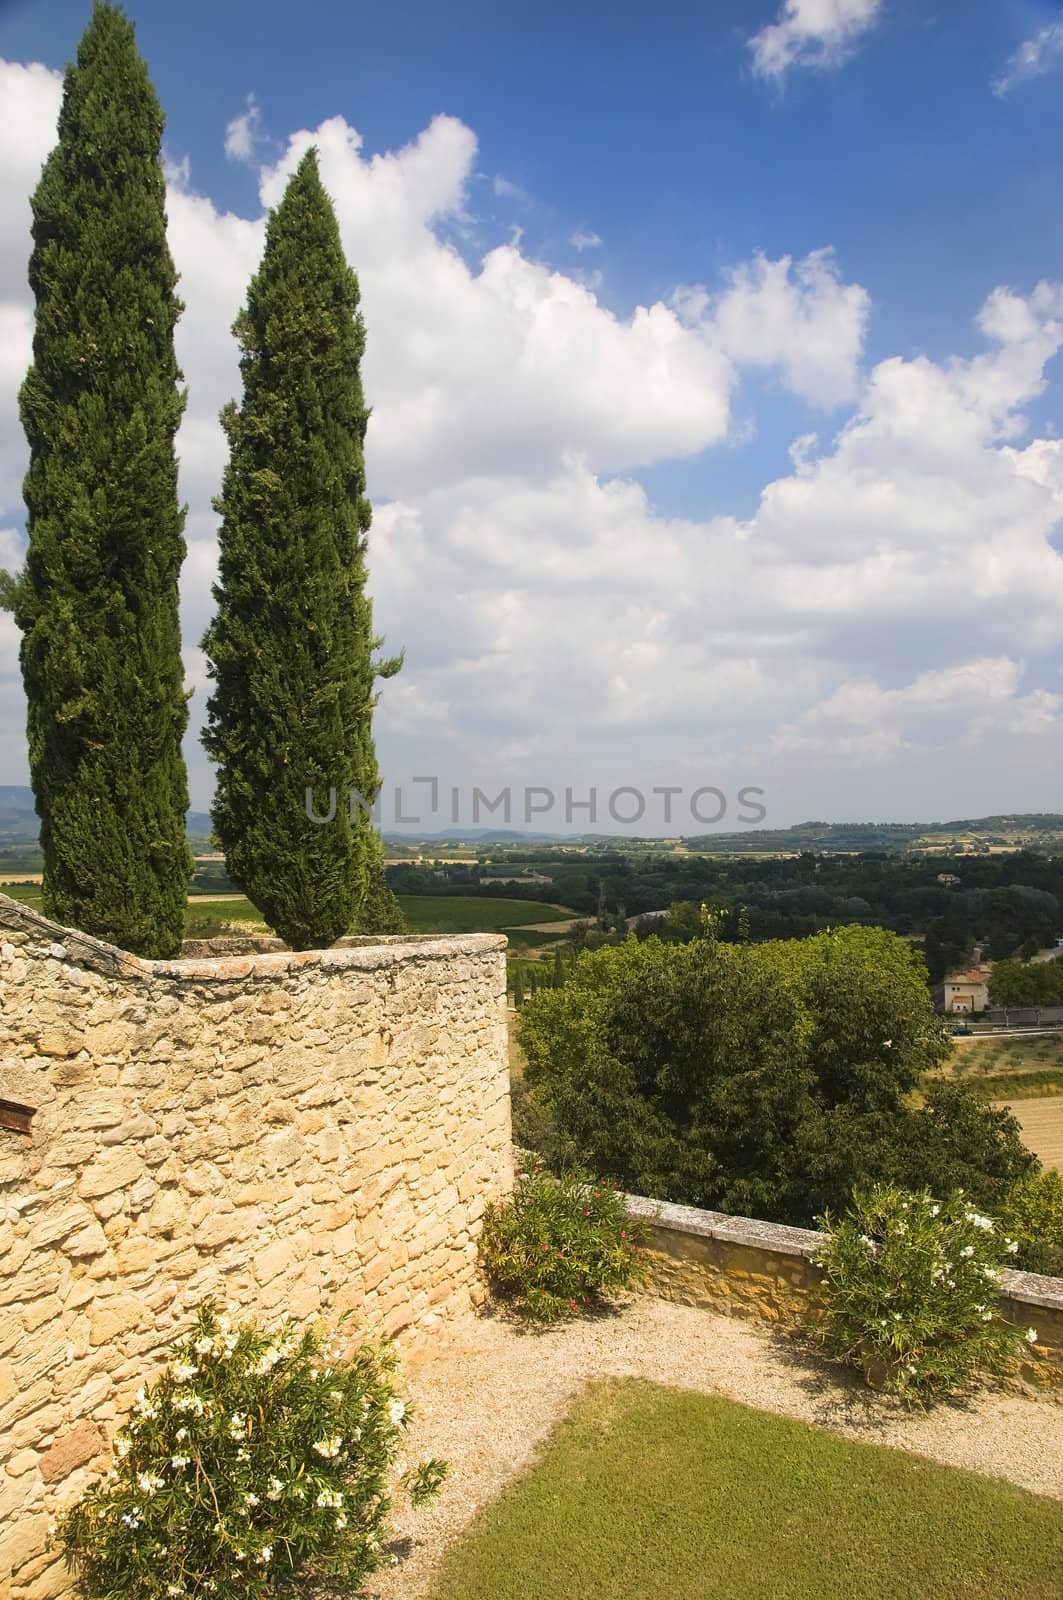 landscape in the region of Luberon, France by irisphoto4